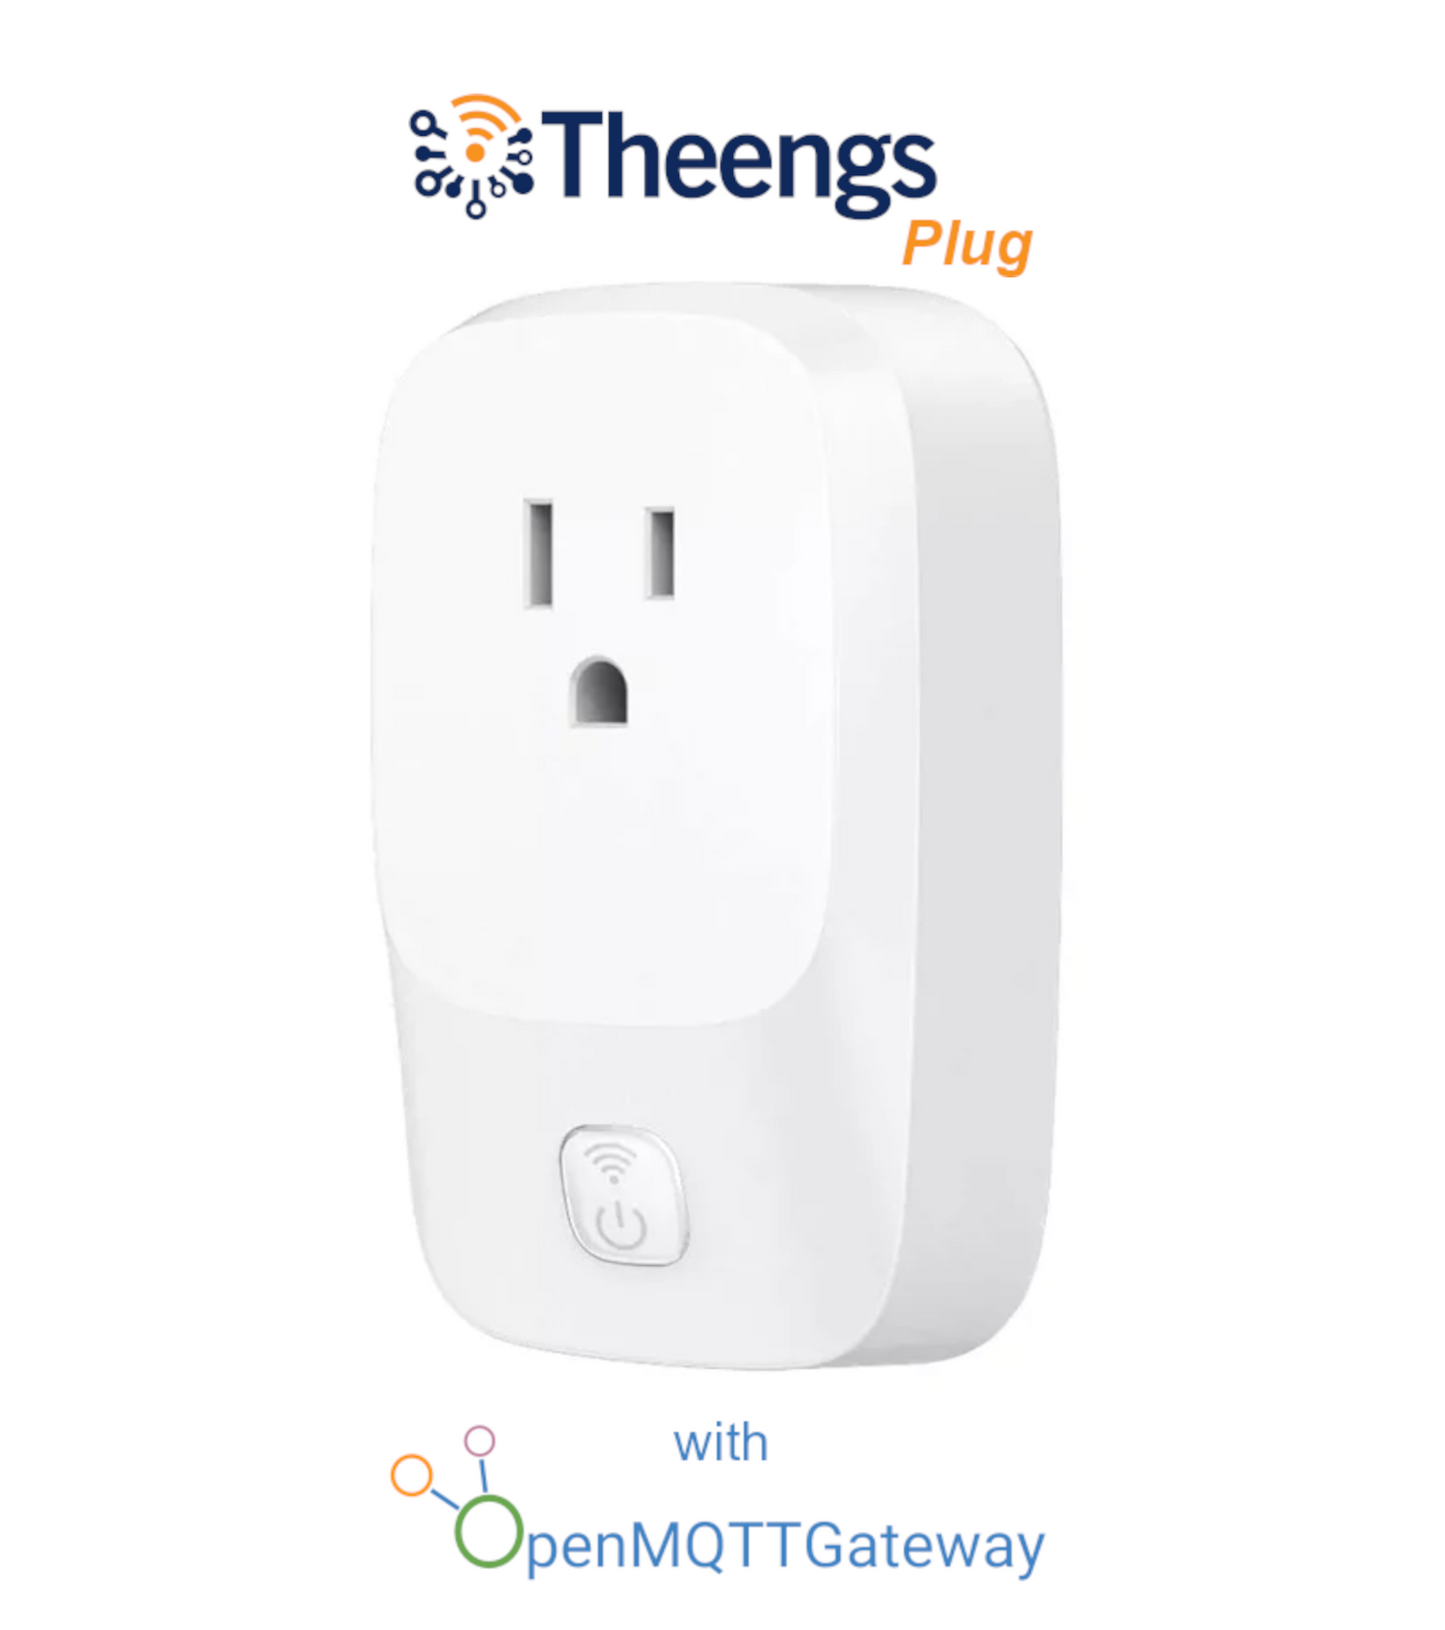 Theengs Plug - ESP32 BLE MQTT gateway, smart plug and energy consumpti